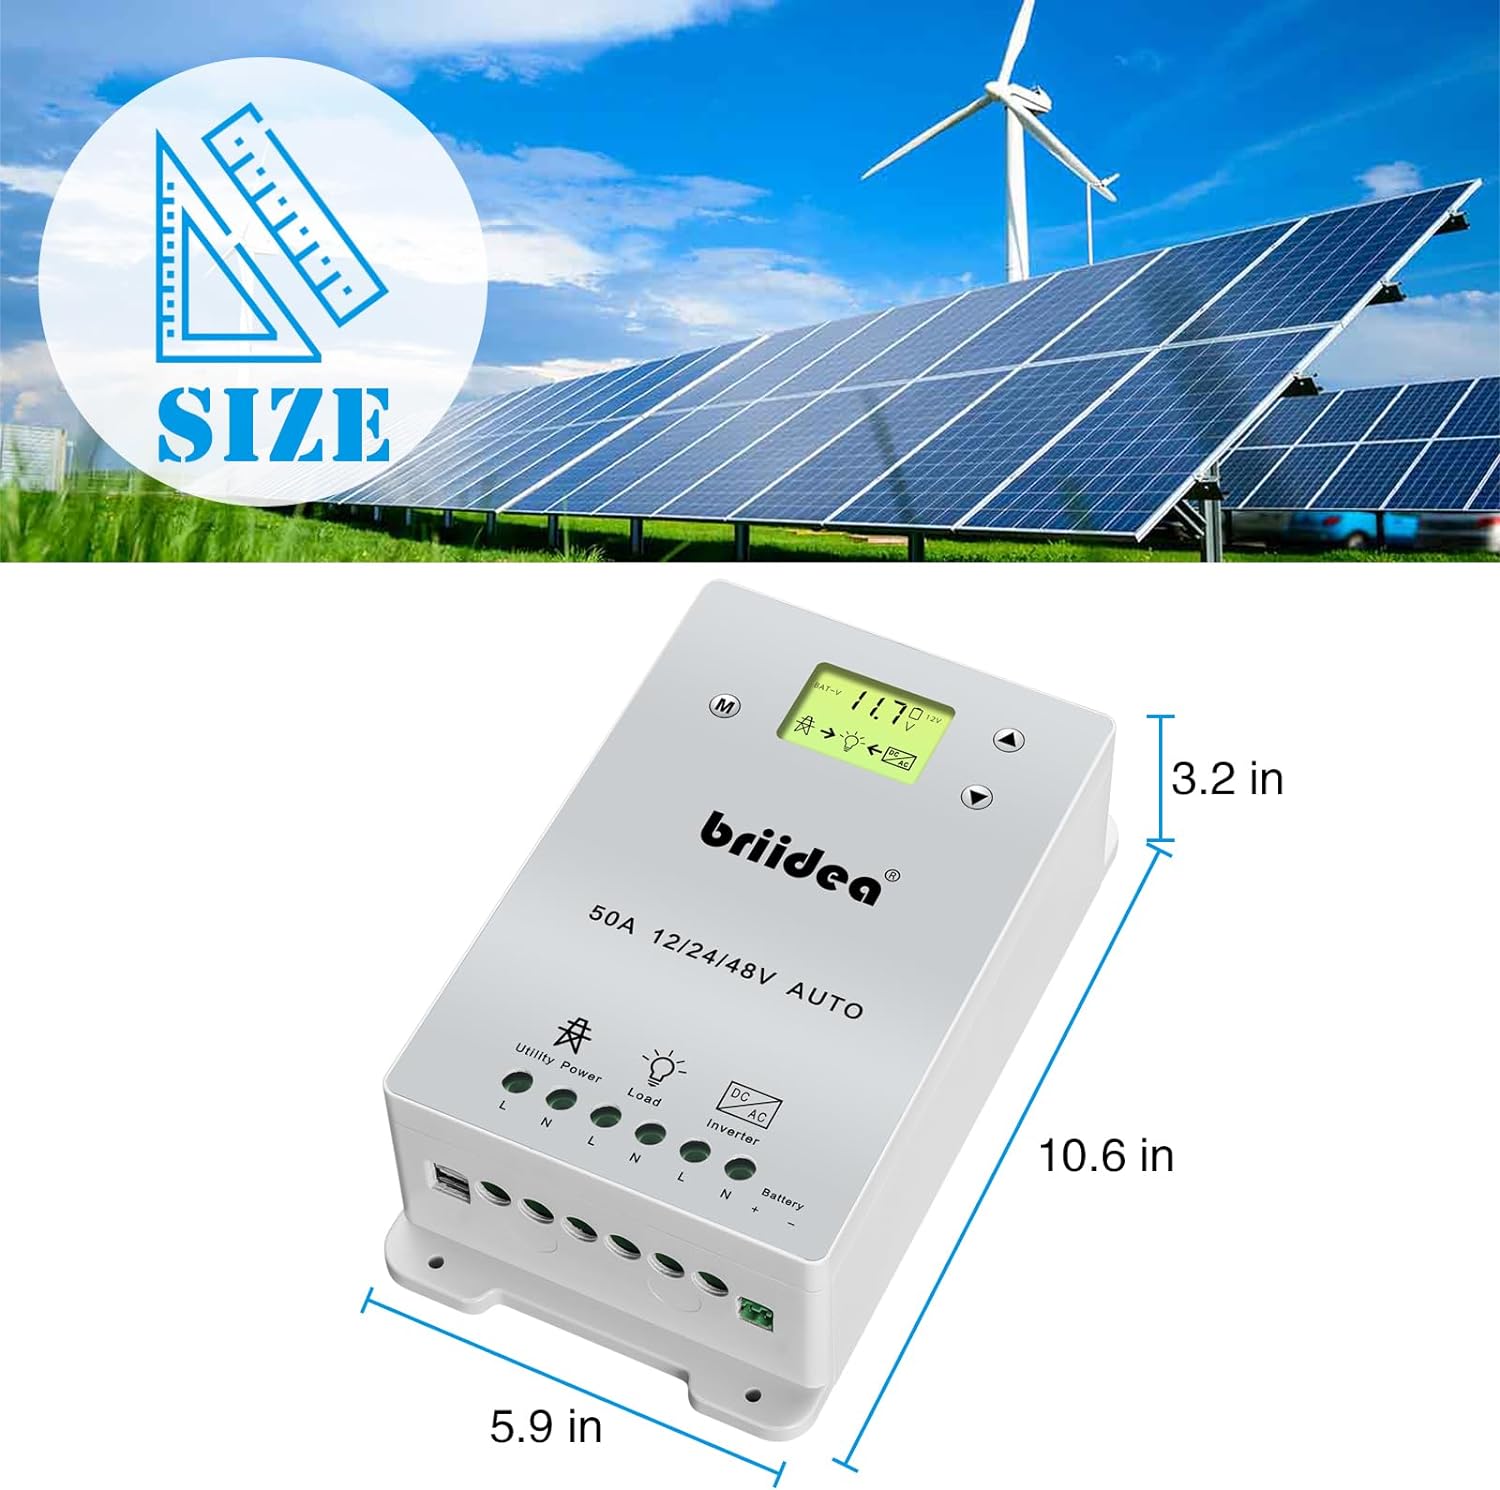 Automatic Transfer Switch, Briidea 50A 5500 Watt ATS Dual Power Controller for Off Grid Solar Wind Systems DC 12V 24V 48V AC 110V 220V